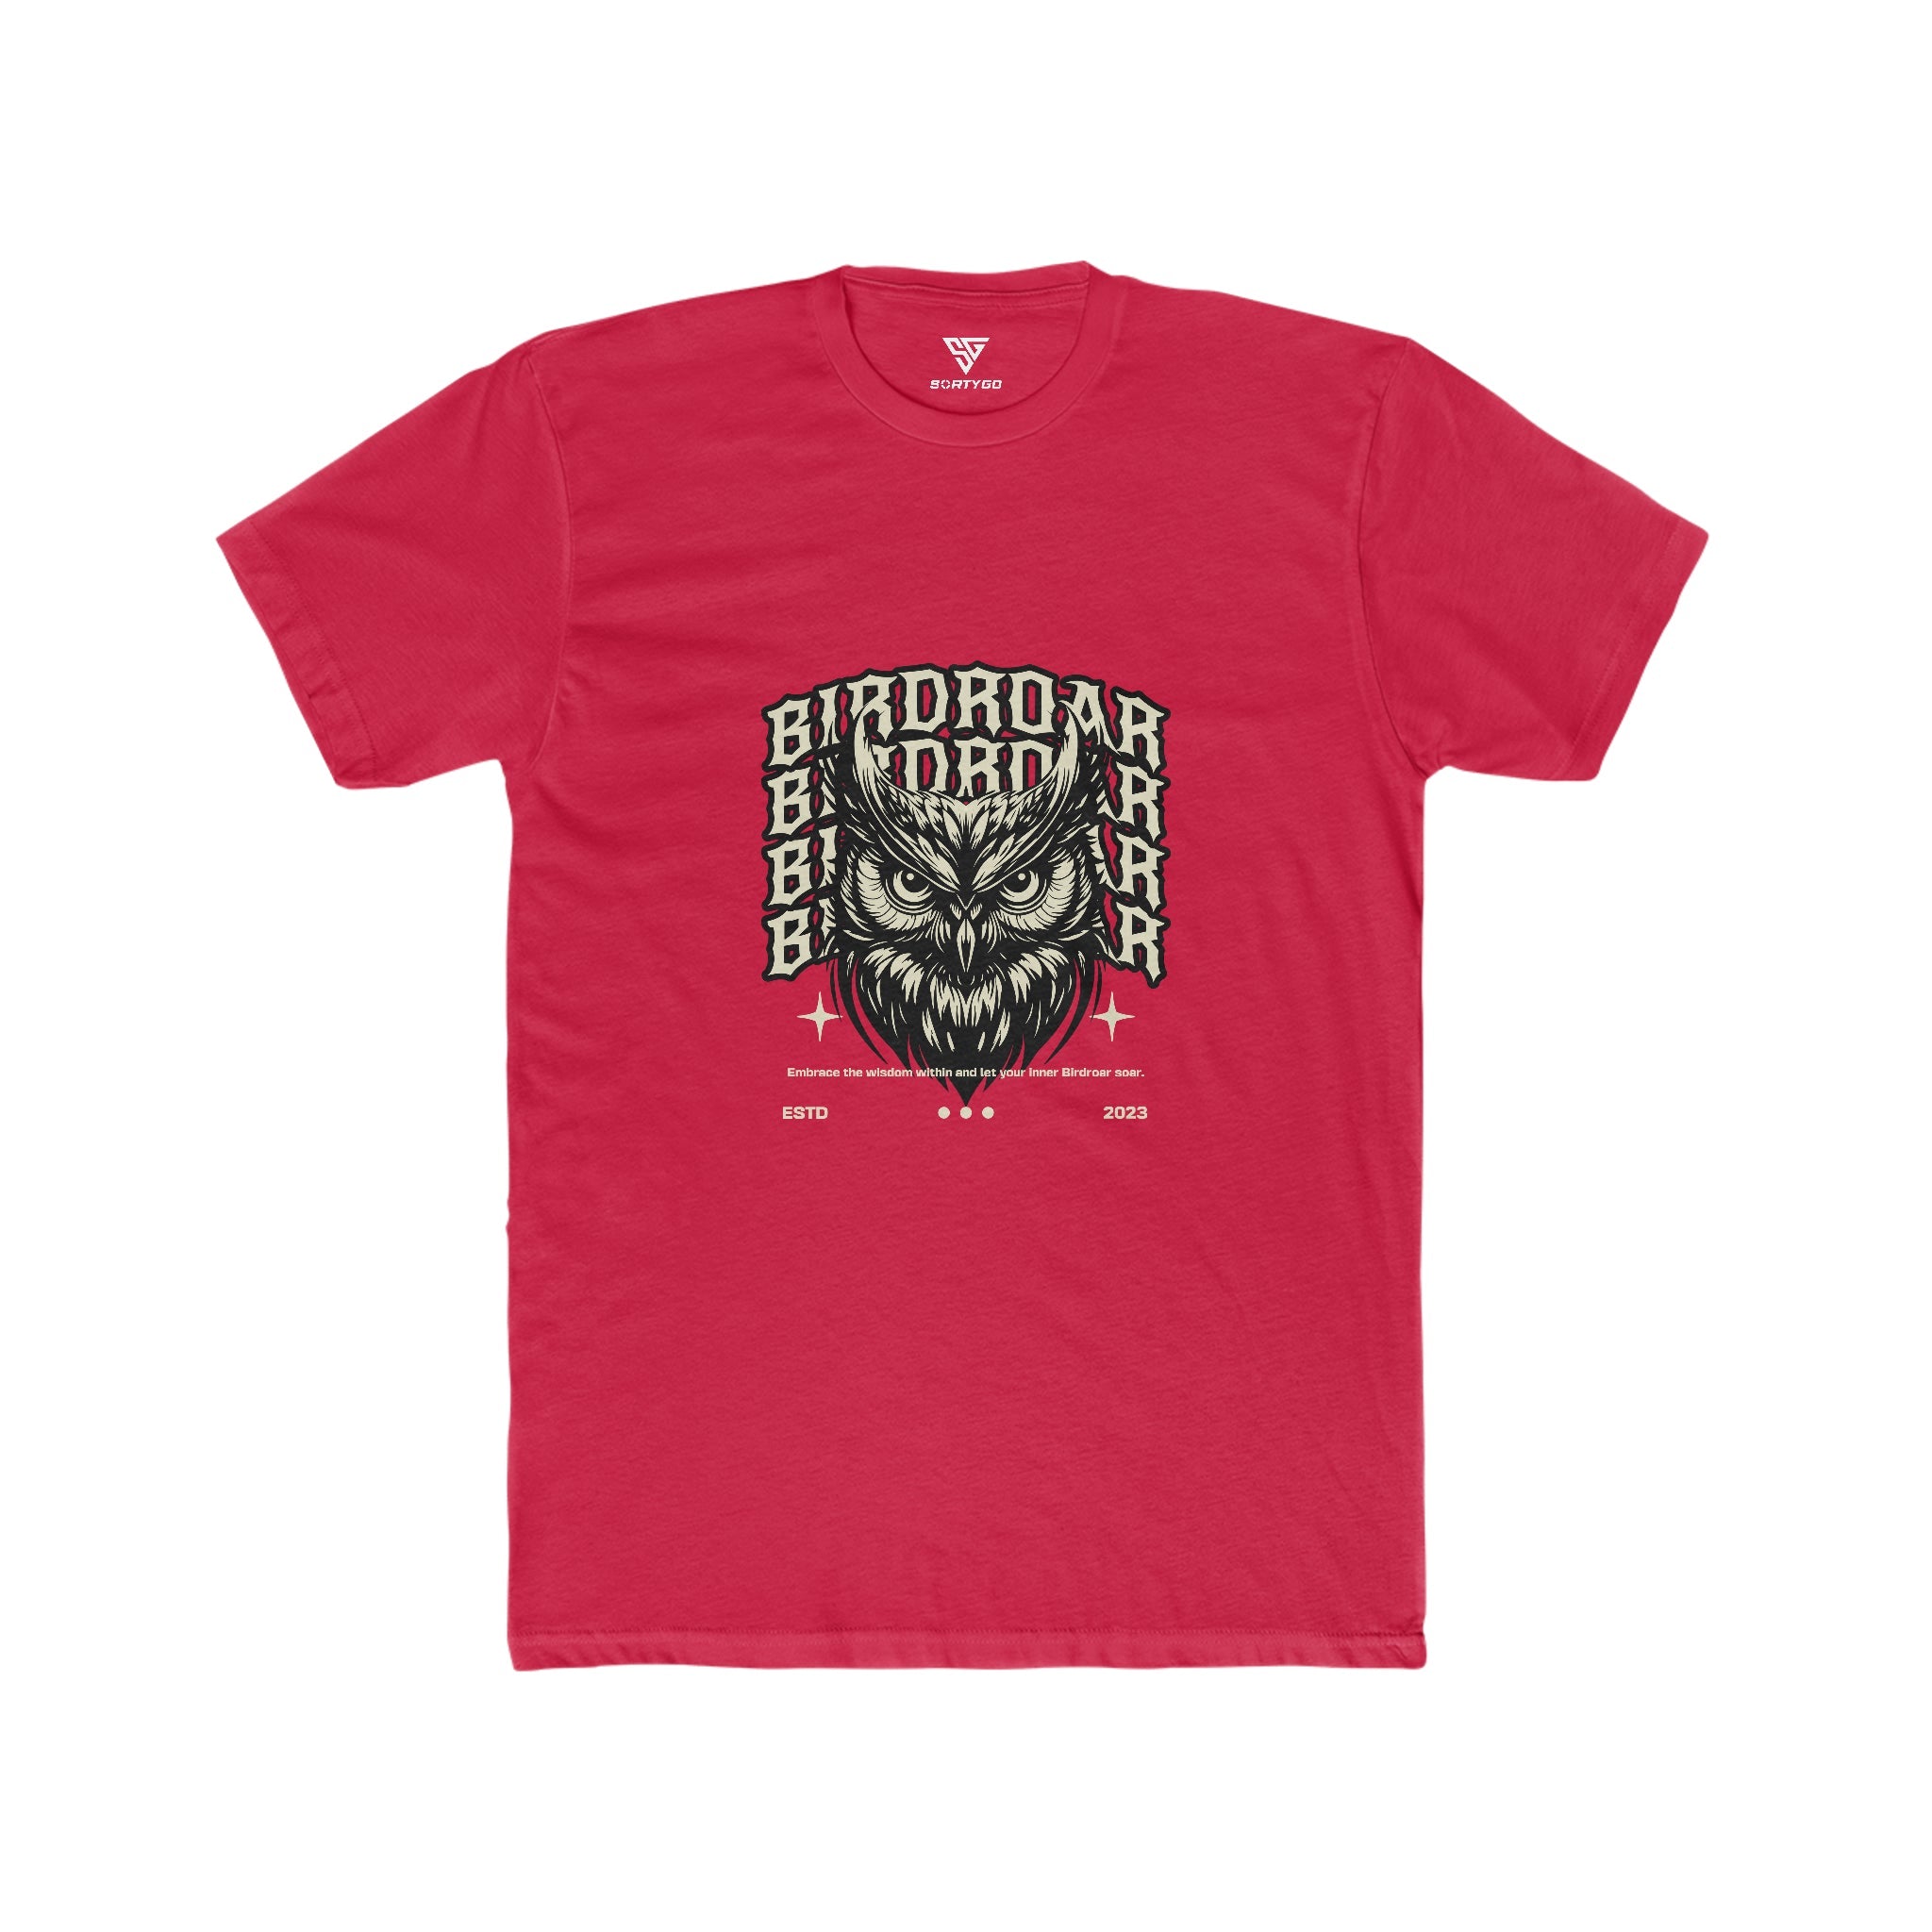 SORTYGO - Birdroar Men Fitted T-Shirt in Solid Red